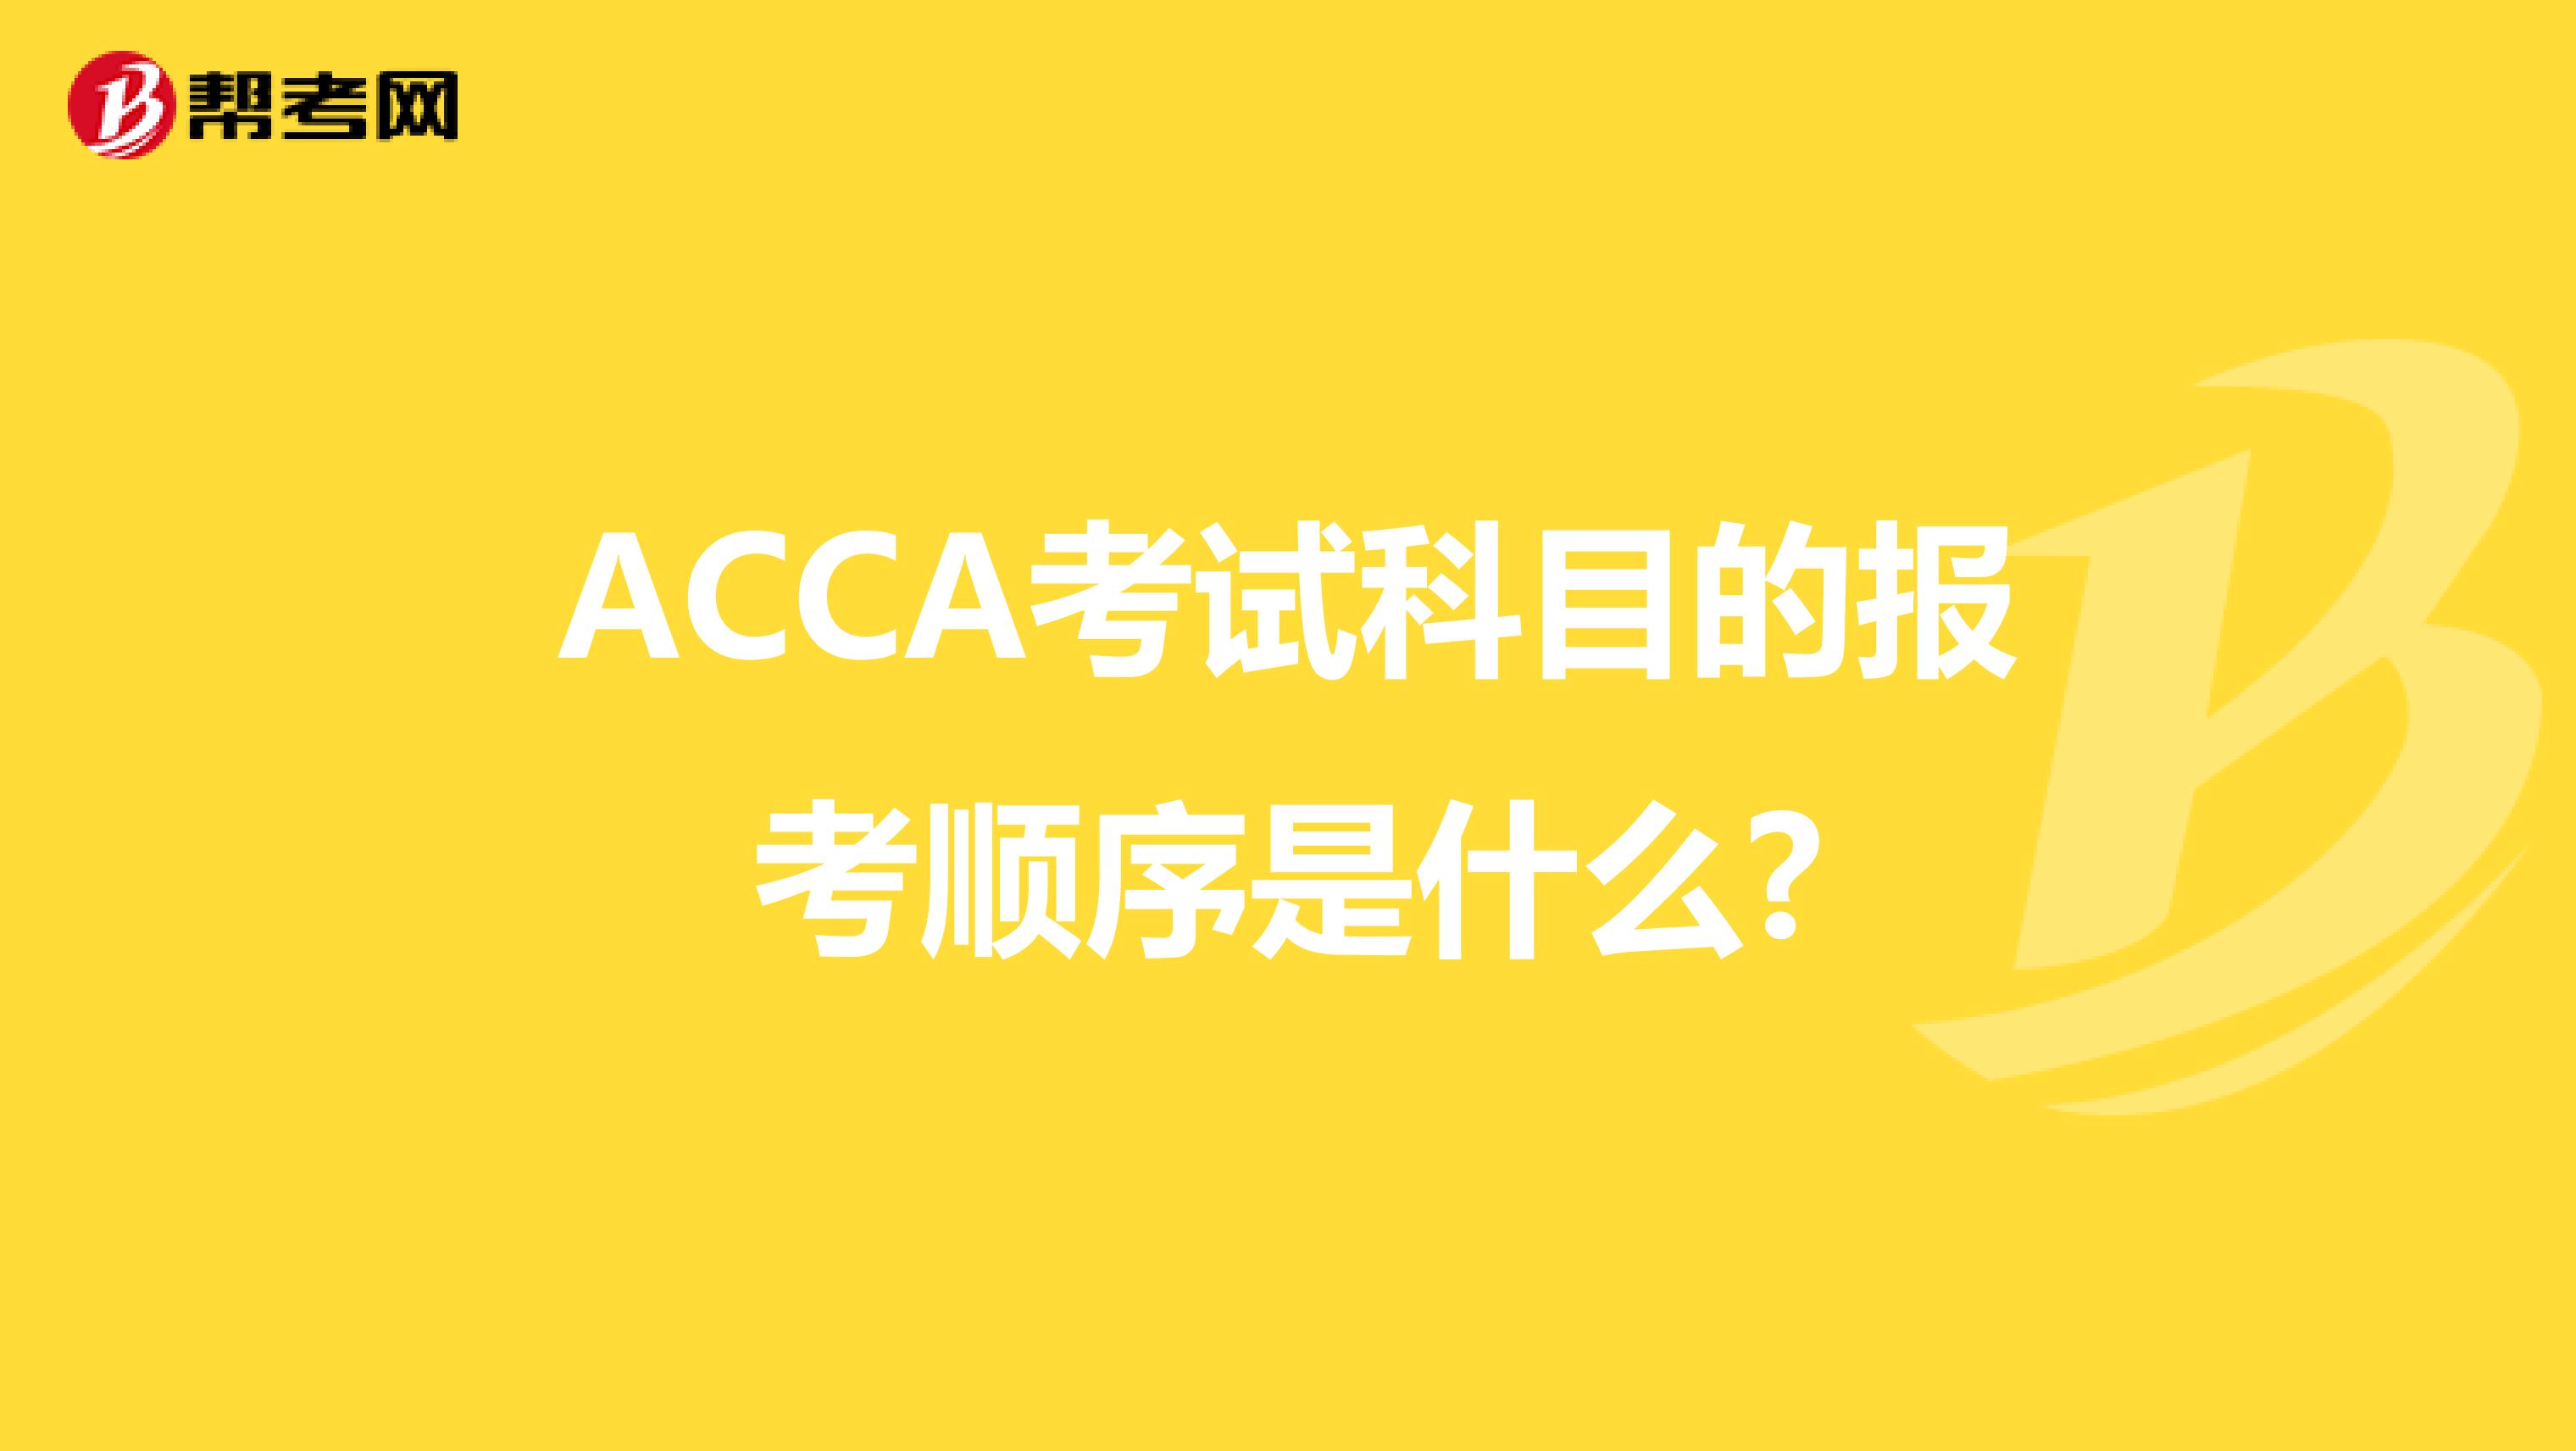 ACCA考试科目的报考顺序是什么?